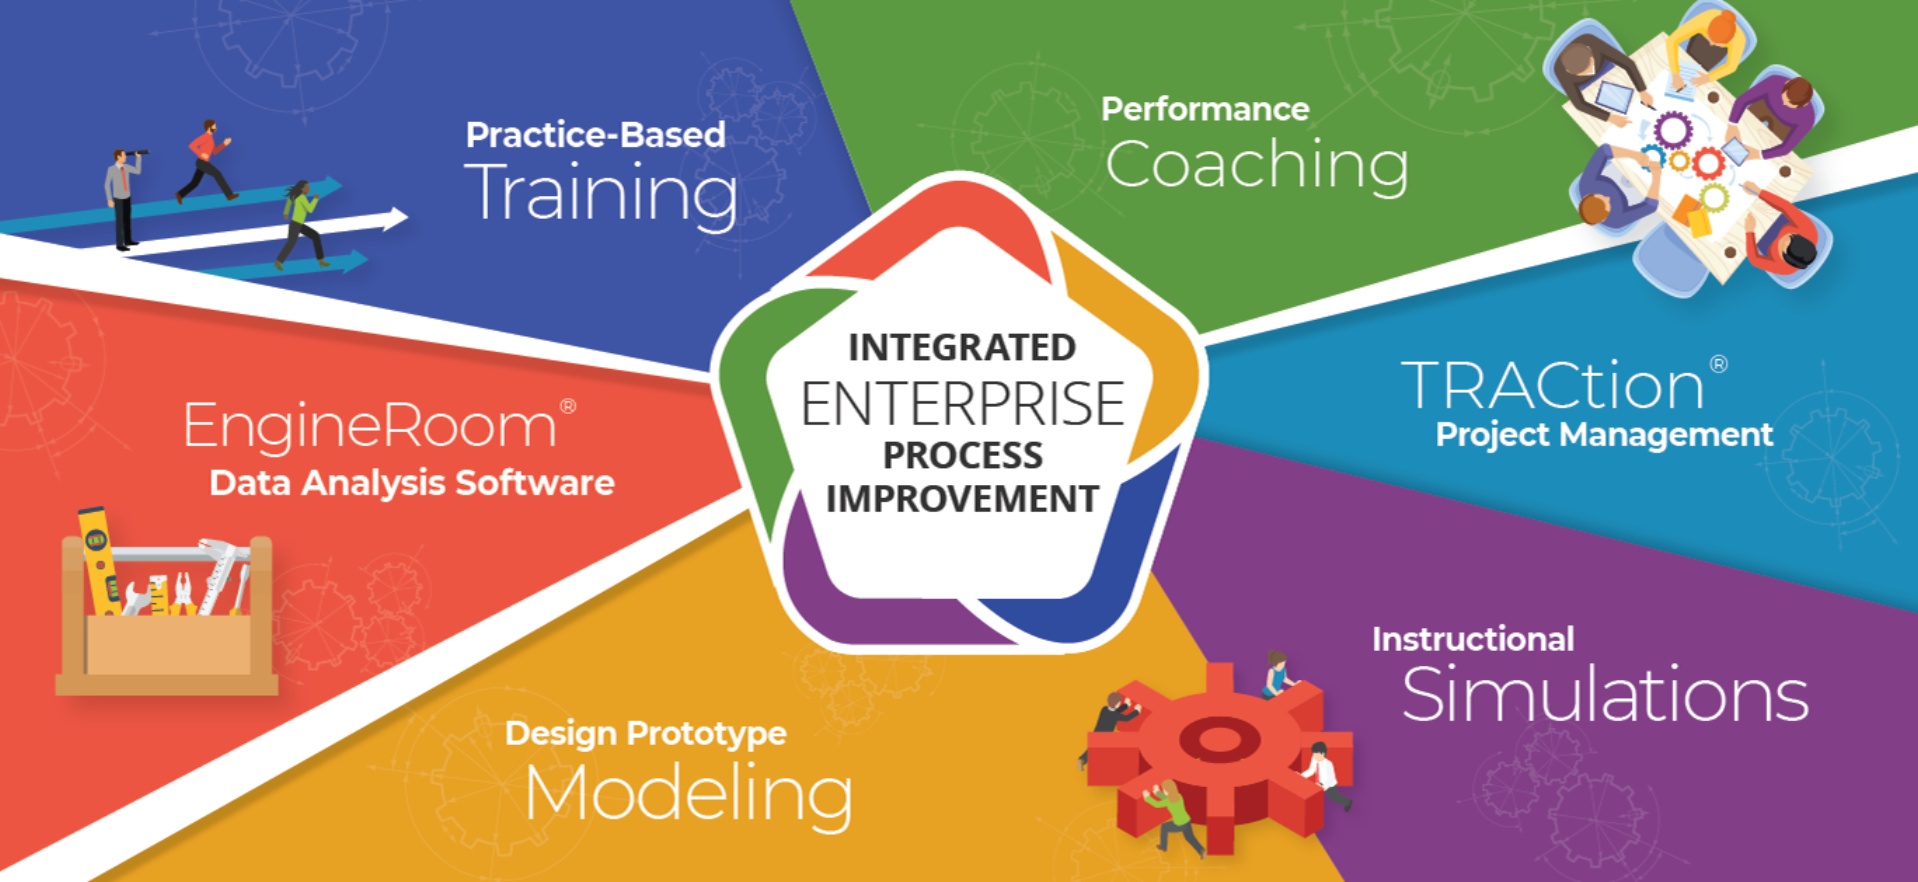 Integrated Enterprise Process Improvement